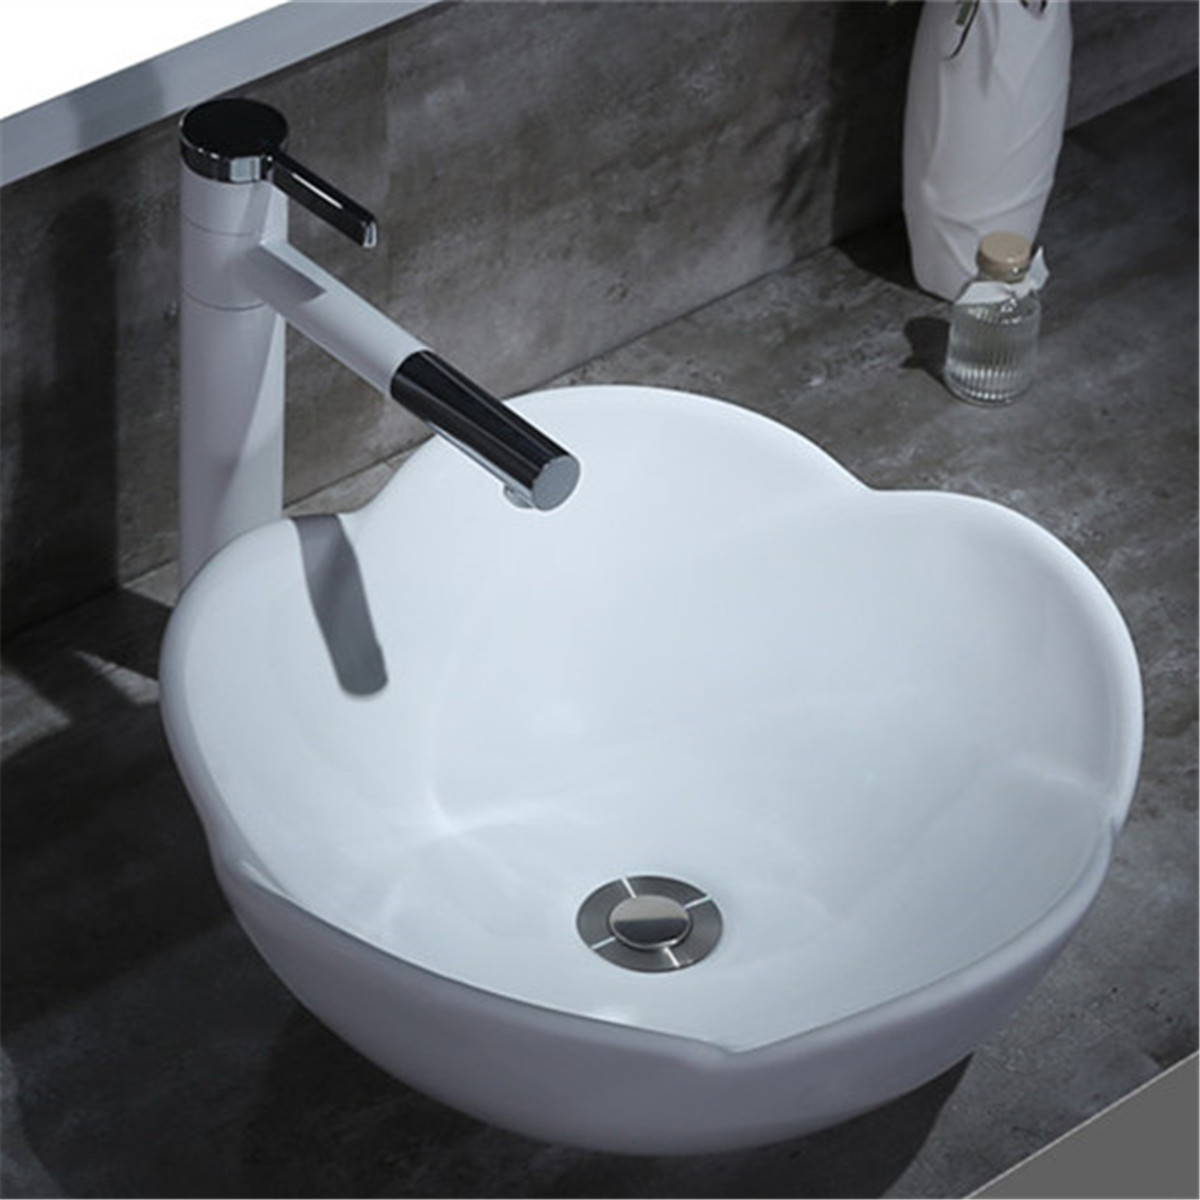 China  Art Basins Manufacture produce bathroom wash sinks to Wholesalers